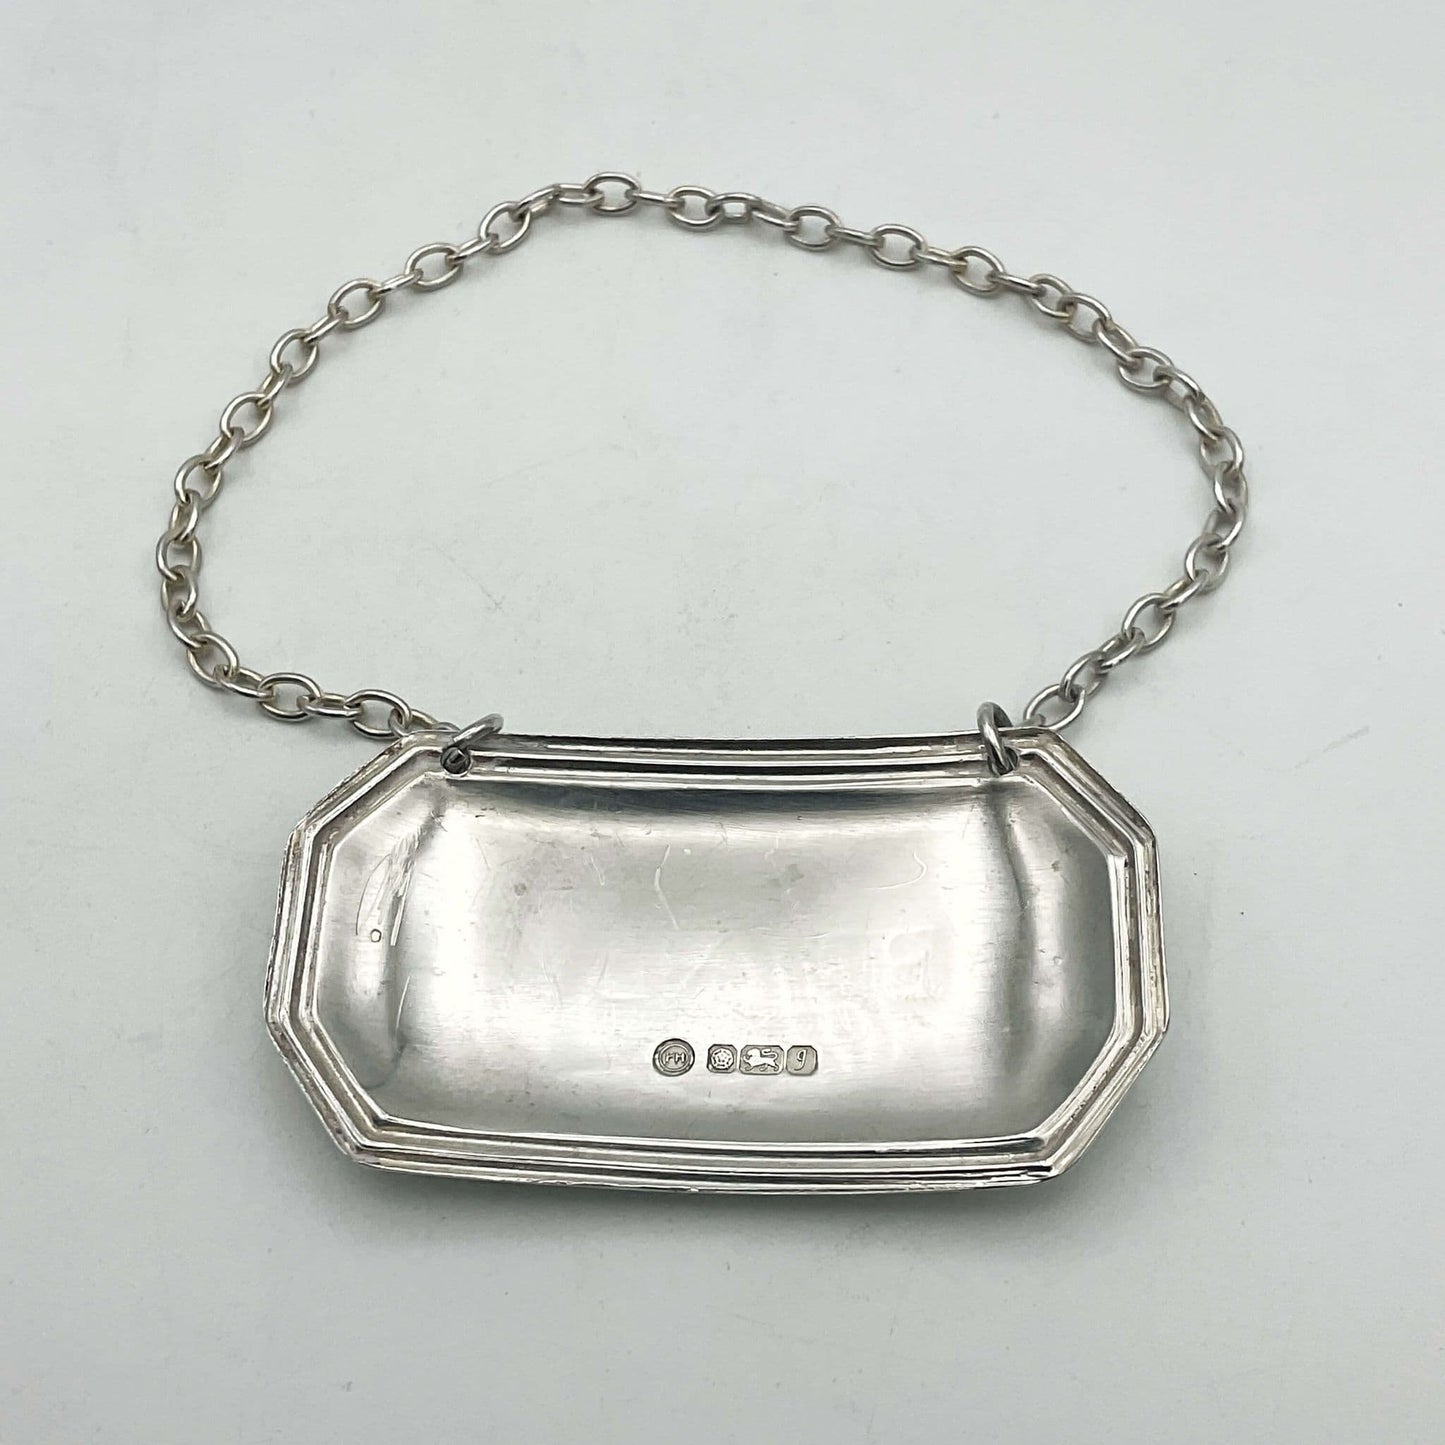 1983 Brandy Sterling Silver Decanter Label